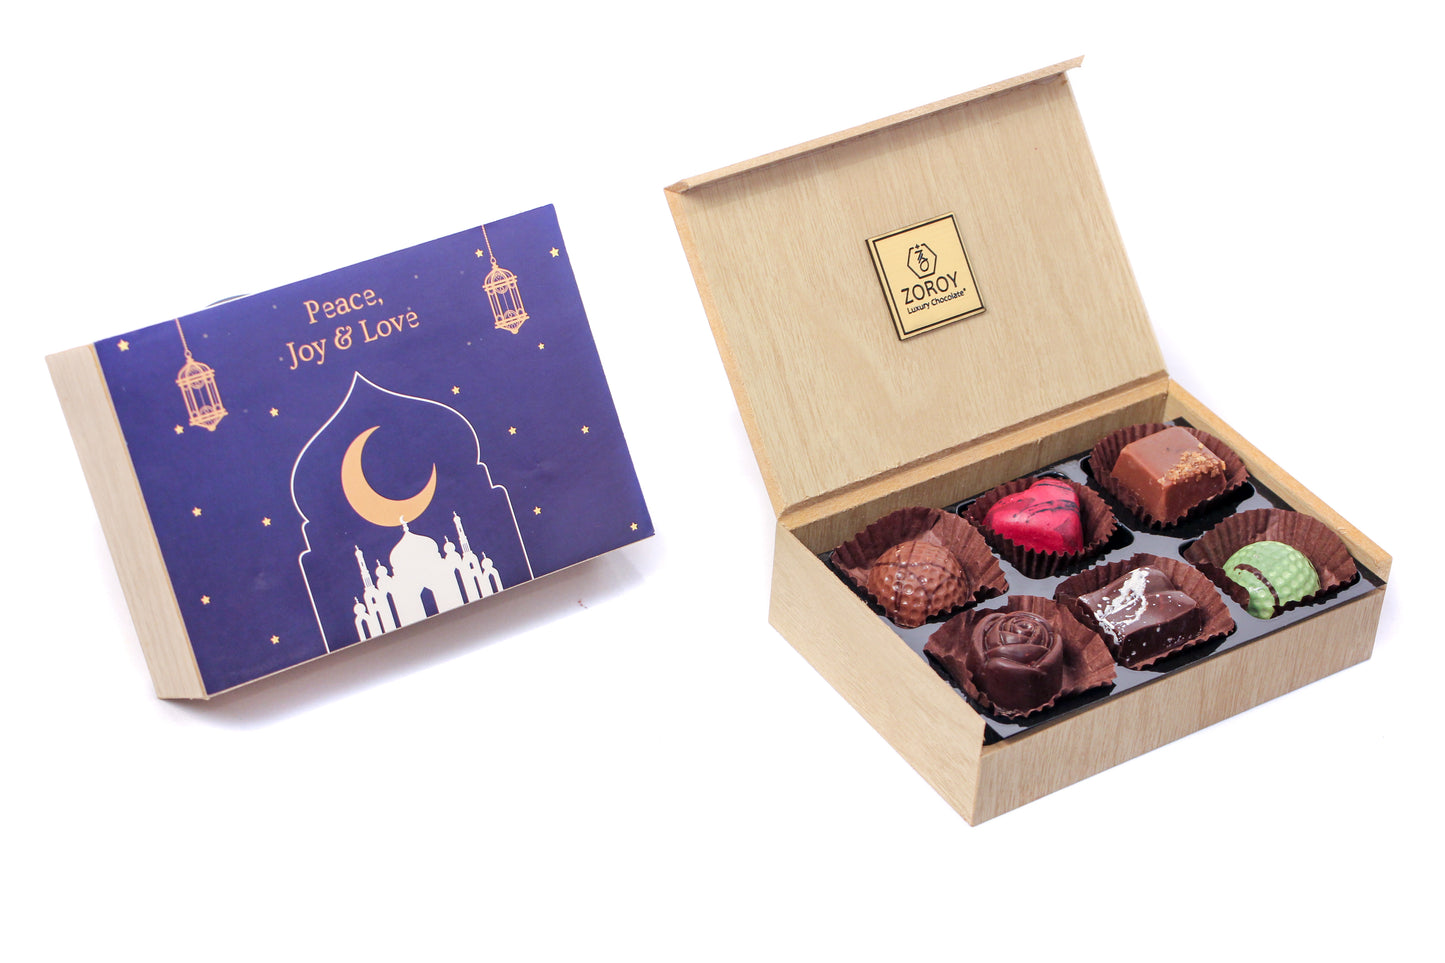 ZOROY LUXURY CHOCOLATE Eid Mubarak Gifts Box | Ramadan gift Wooden Box With 6 Pure Couverture Milk Chocolate |Signature Belgian style